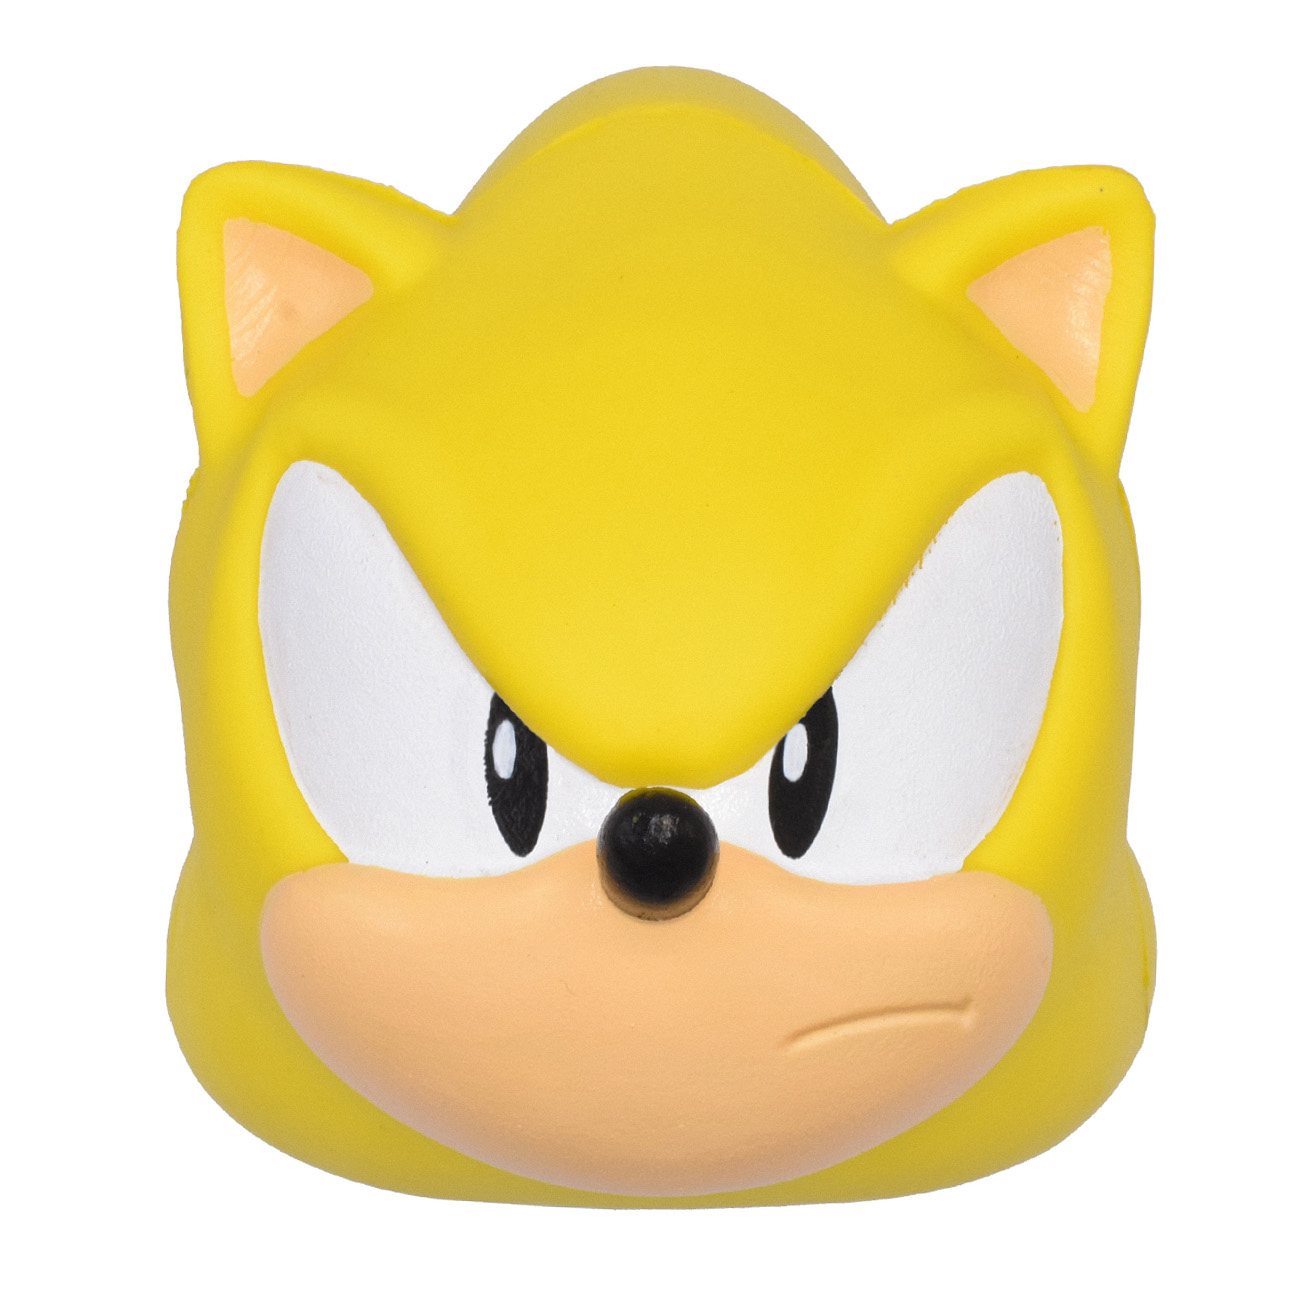 Sonic the Hedgehog - Super Sonic SquishMe Mega